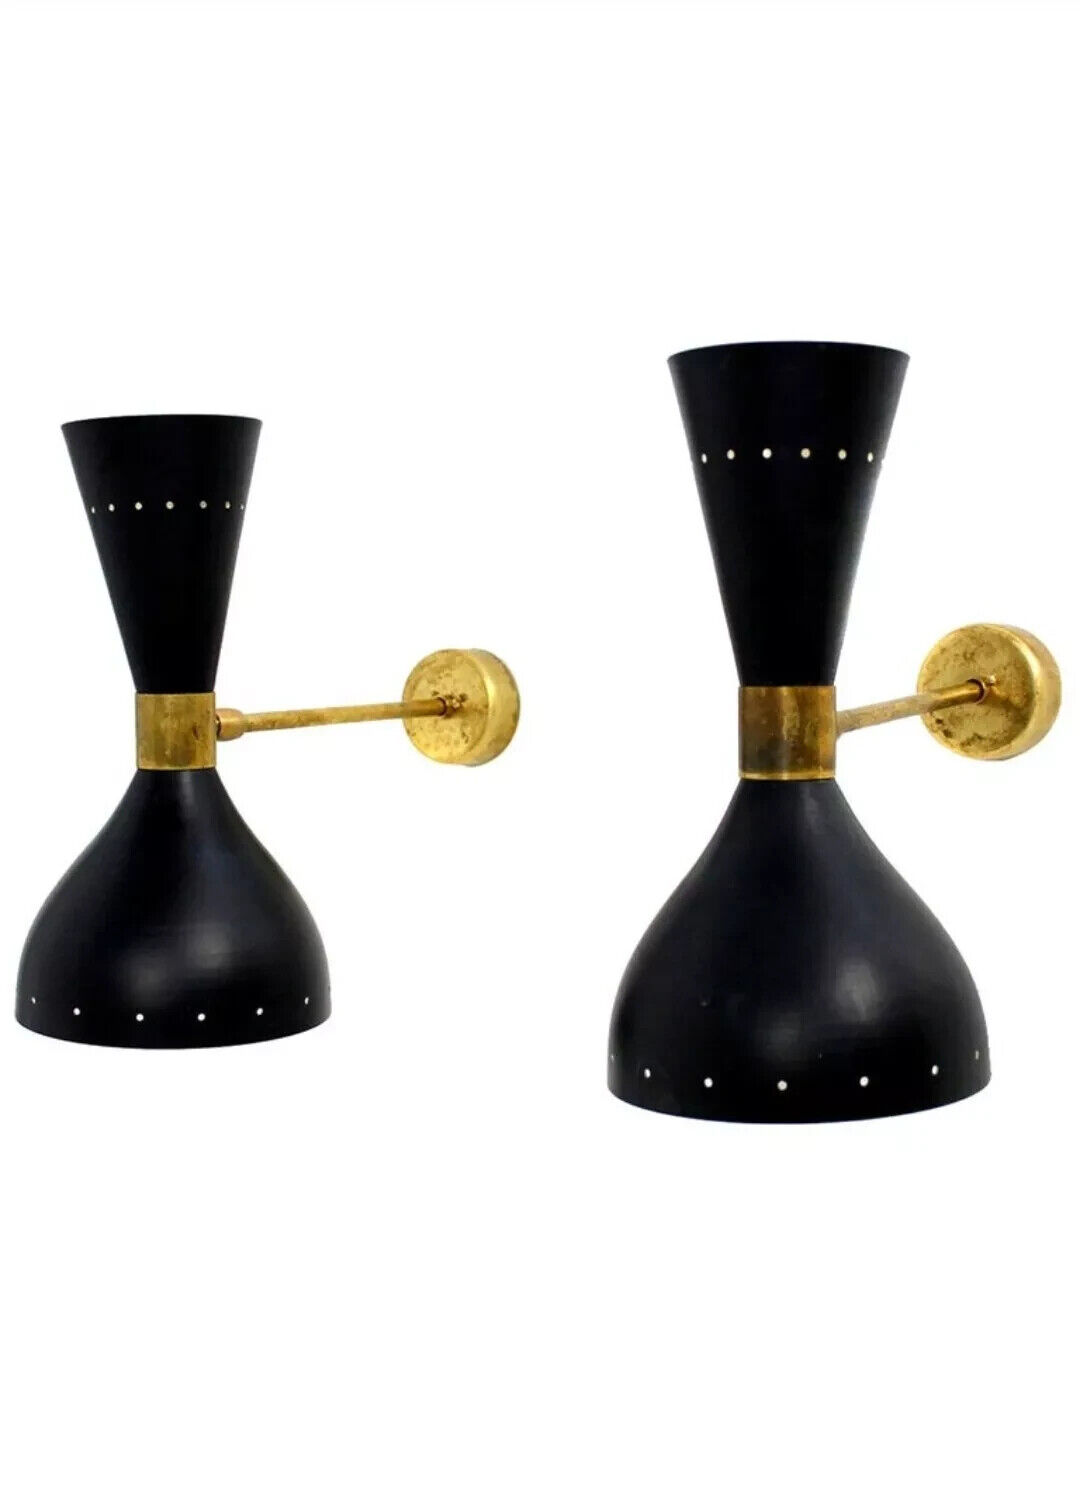 A Pair of Wall Sconce Diabolo Modern Brass Italian Wall Lights Beautiful Lamp